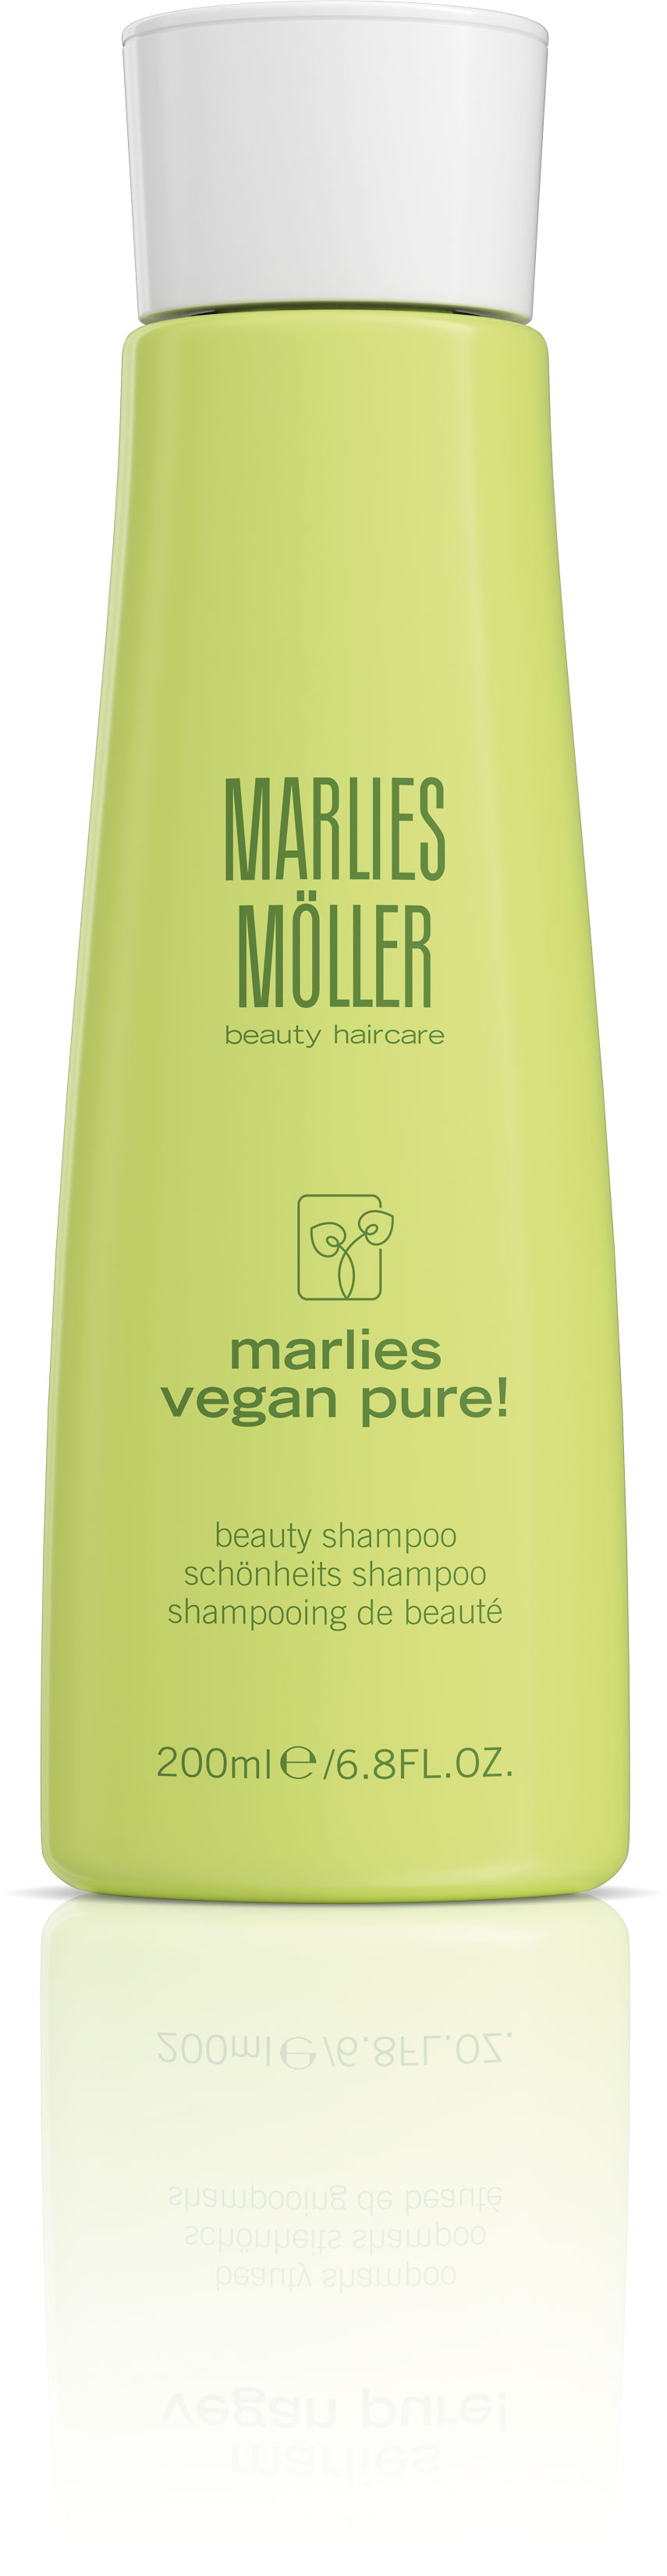 Marlies Möller Vegan Pure Beauty Shampoo 200 ml